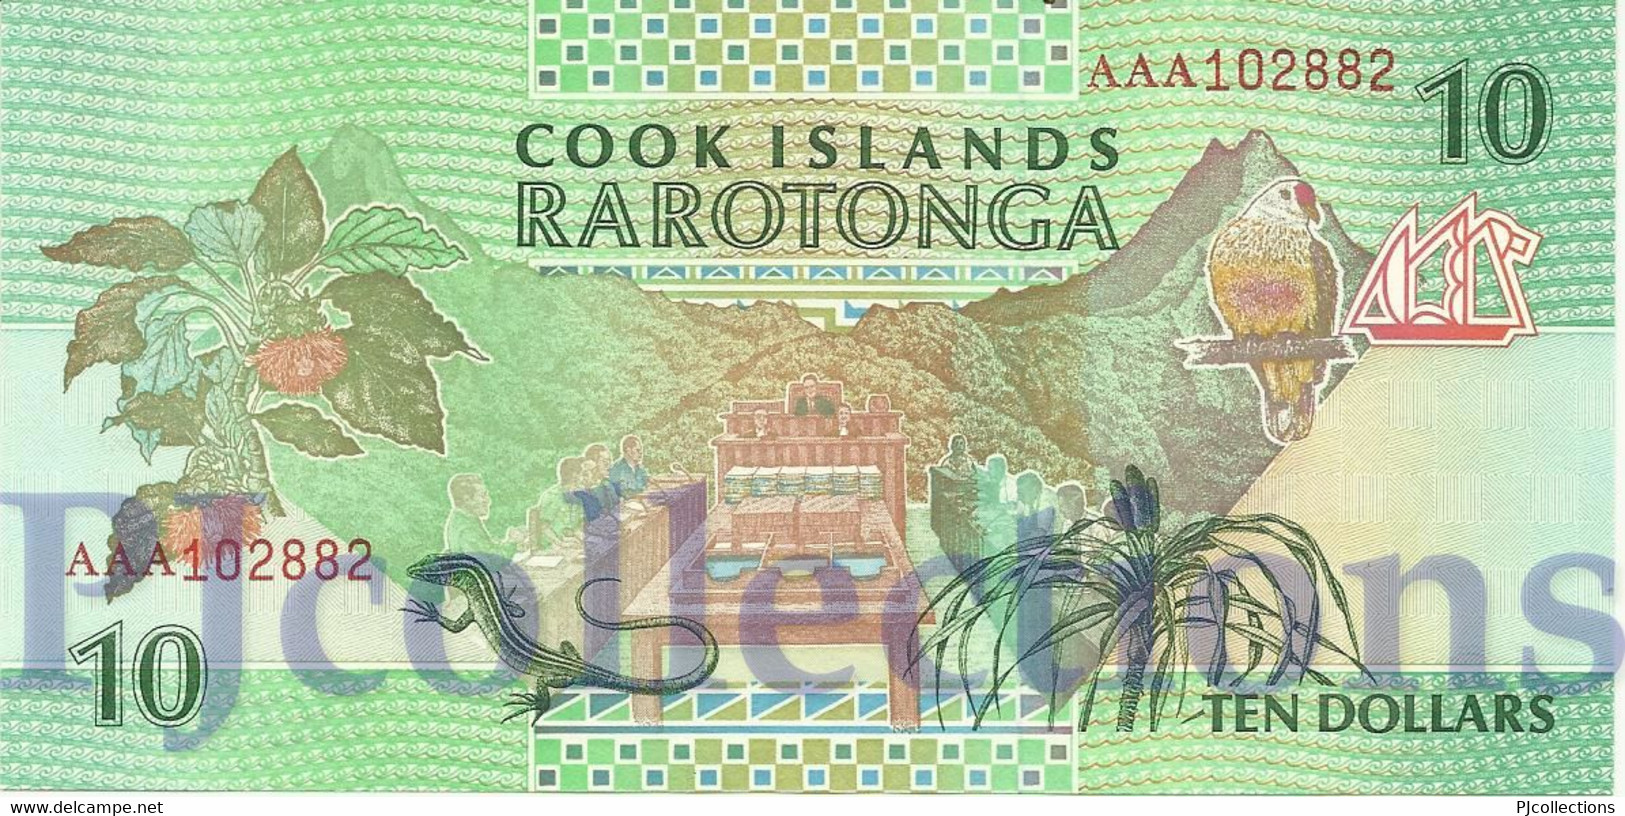 COOK ISLANDS 10 DOLLARS 1992 PICK 8a UNC PREFIX "AAA" - Cook Islands